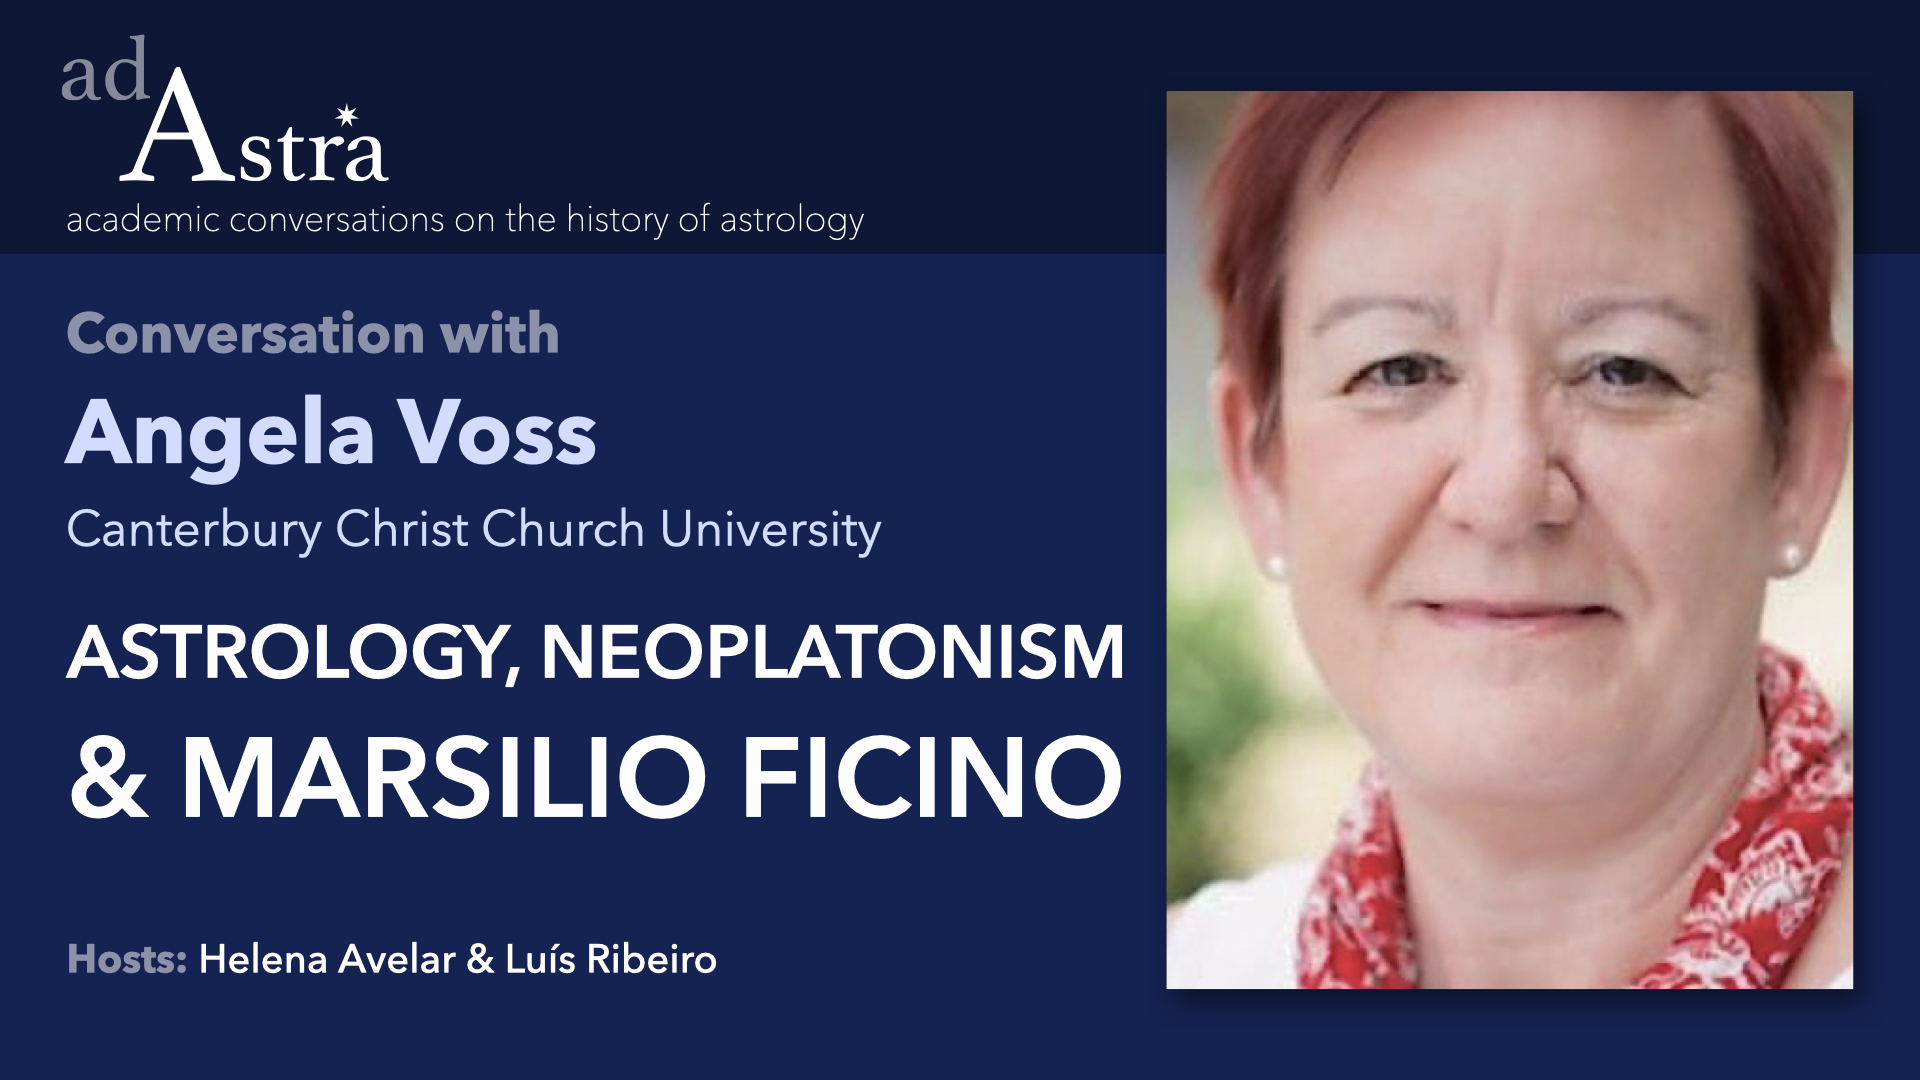 Astrology, Neoplatonism & Marsilio Ficino with Angela Voss